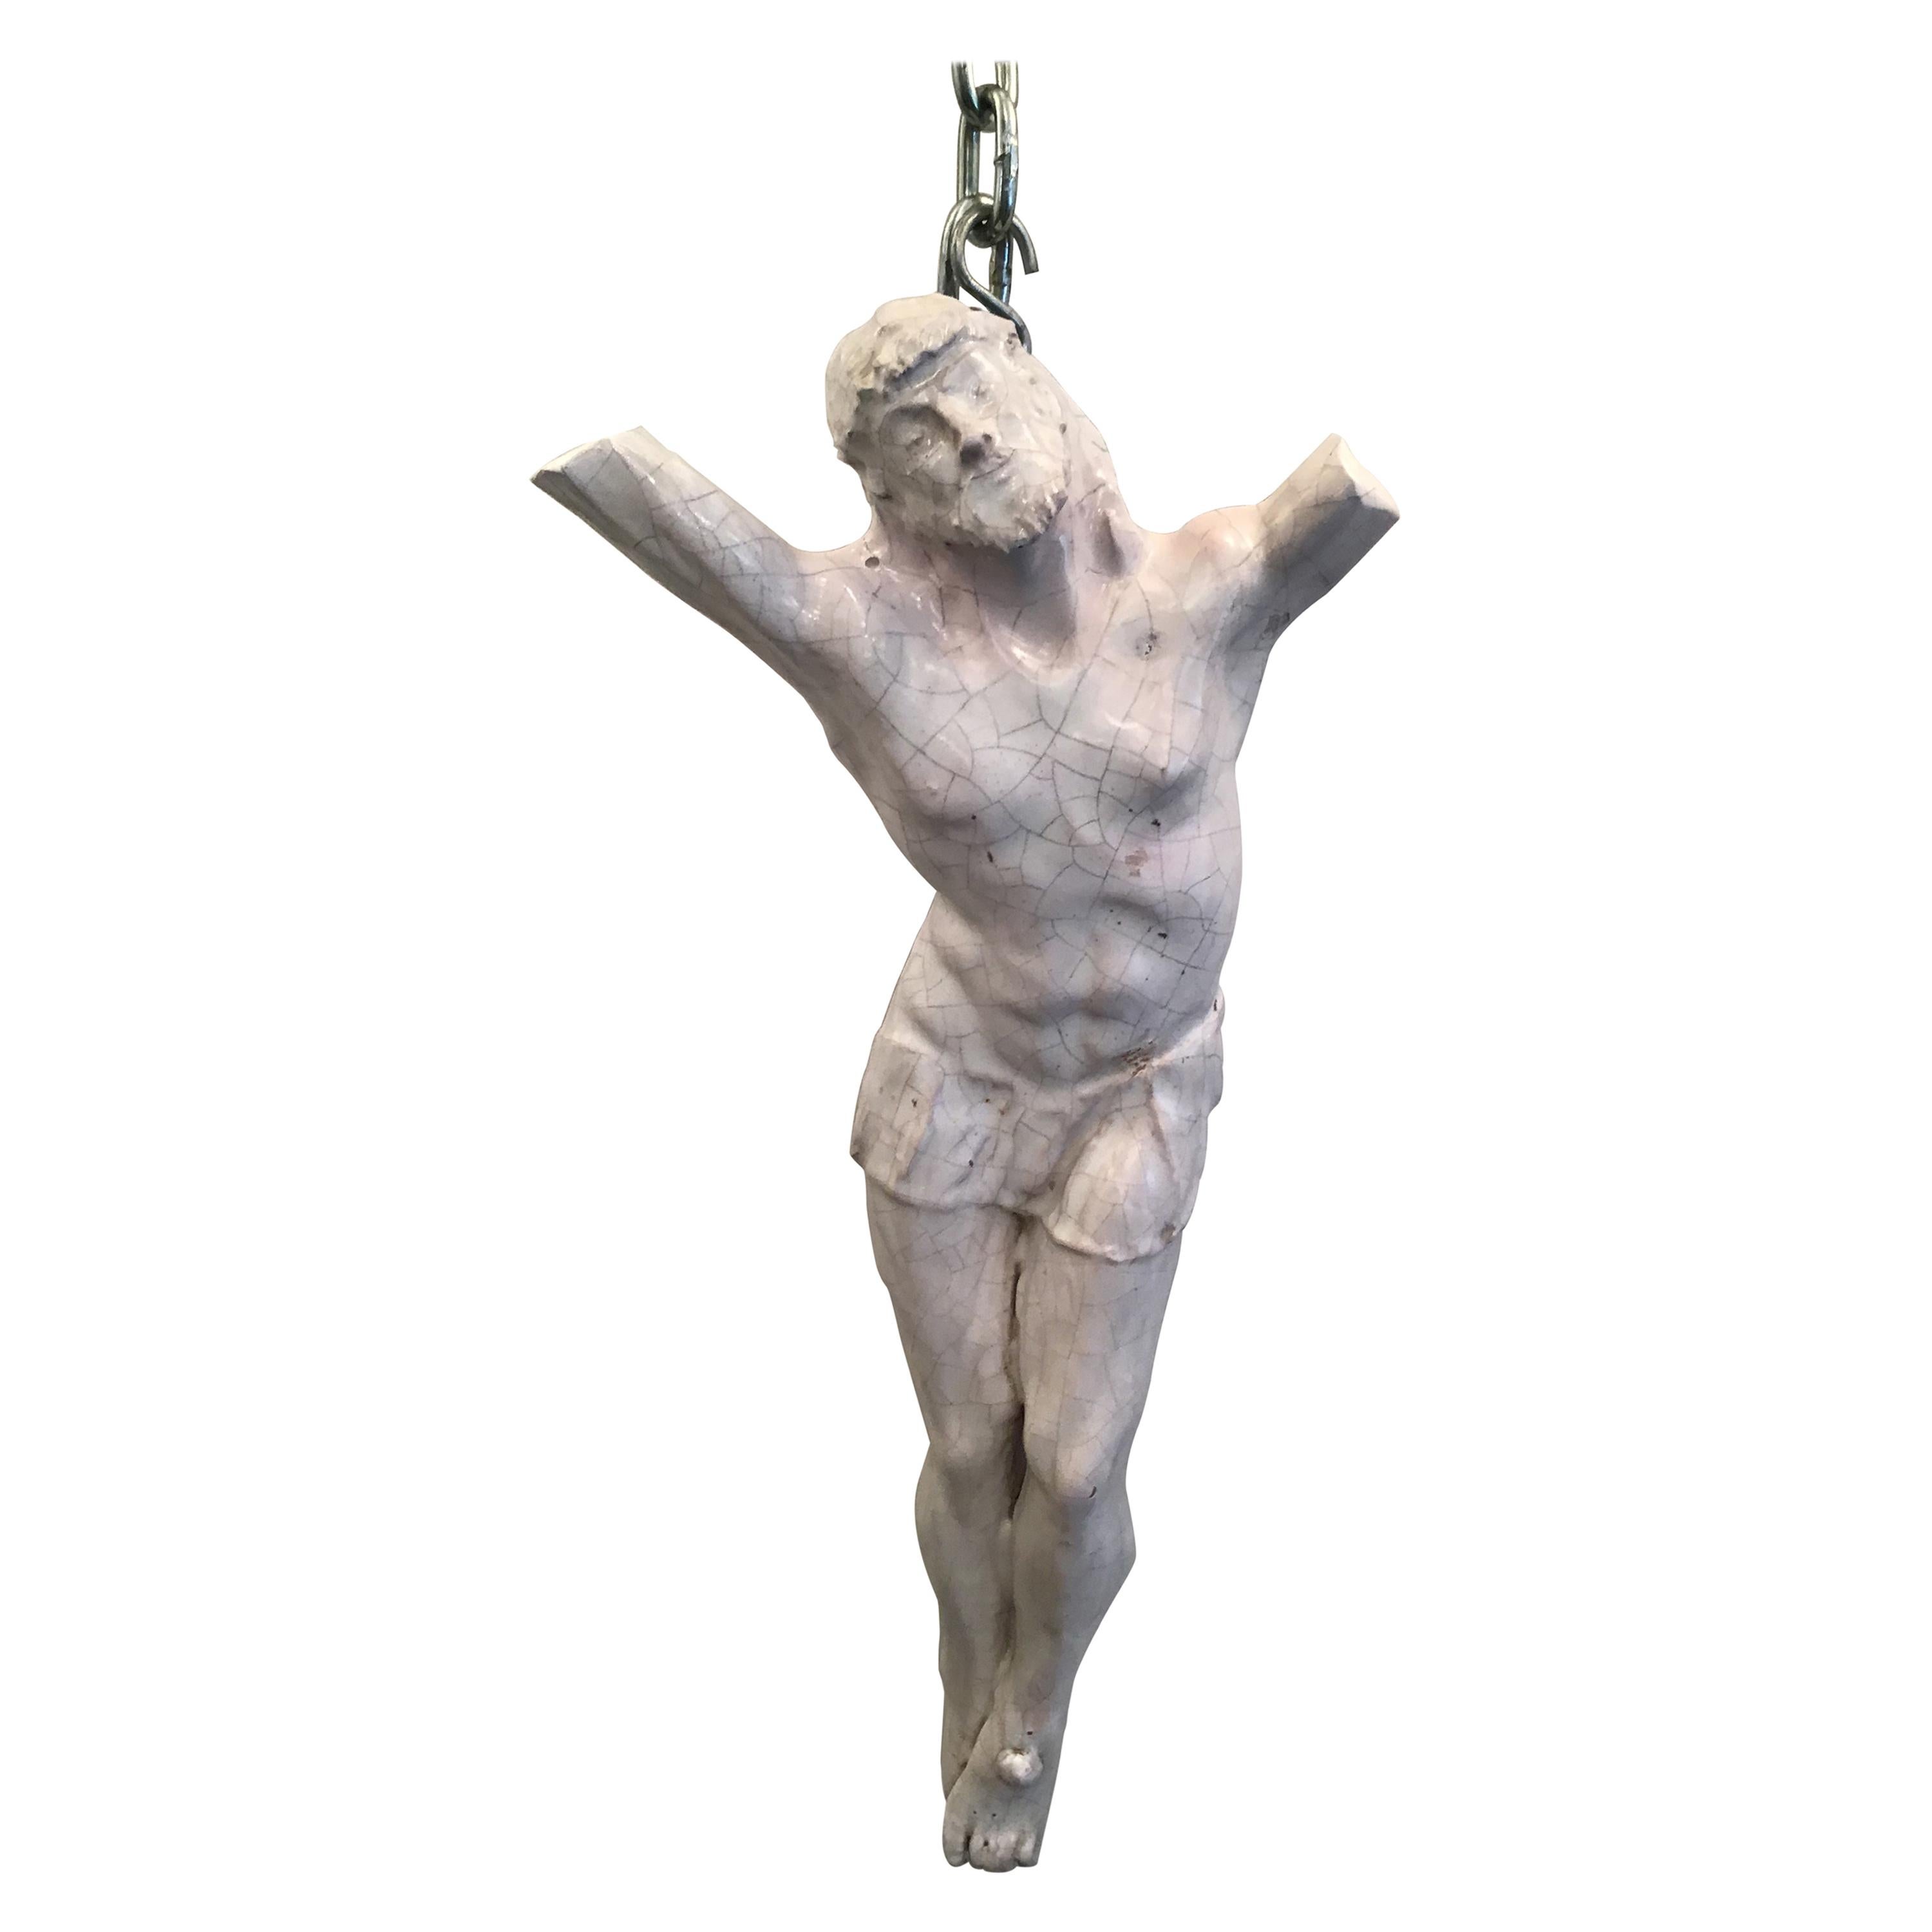 Crocefix Ronzan Ceramic, 1950, Italy